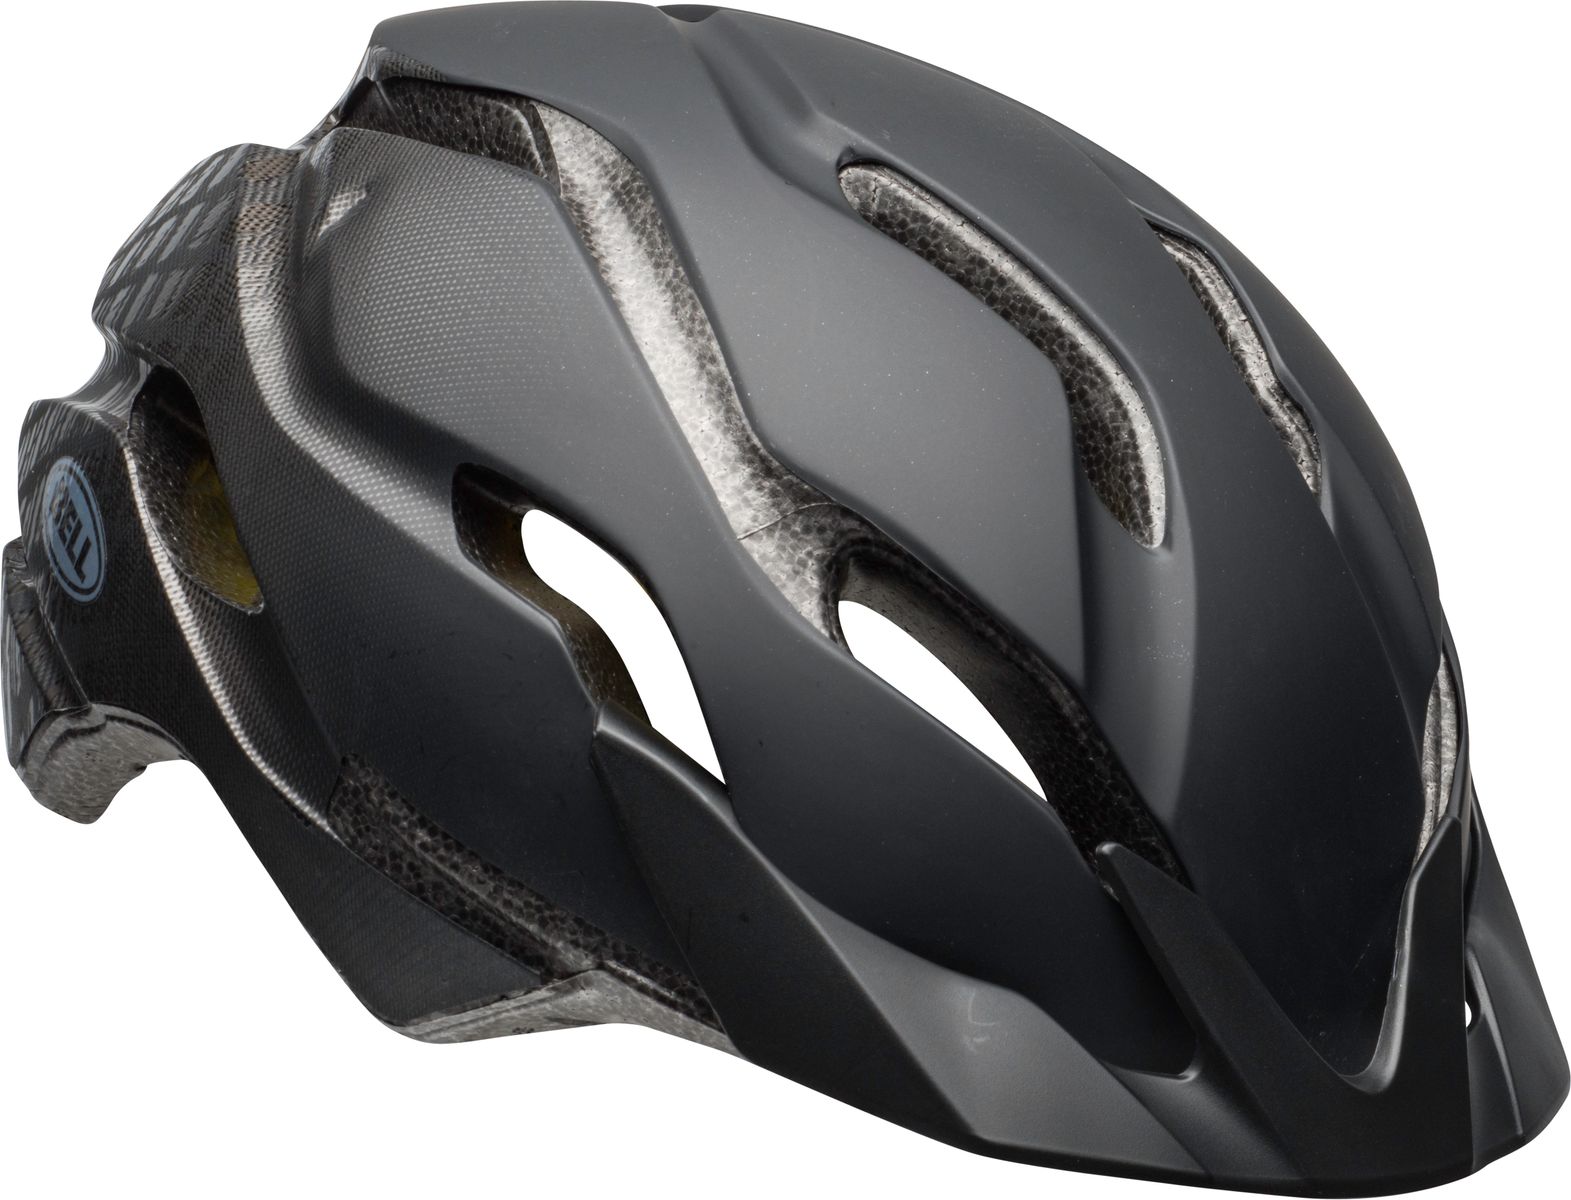 [RDY] [送料無料] Bell レボリューション MIPSバイクヘルメット マットブラック アダルト14+ 54-61cm [楽天海外通販] | Bell Revolution MIPS Bike Helmet, Matte Black, Adult 14+ 54-61cm